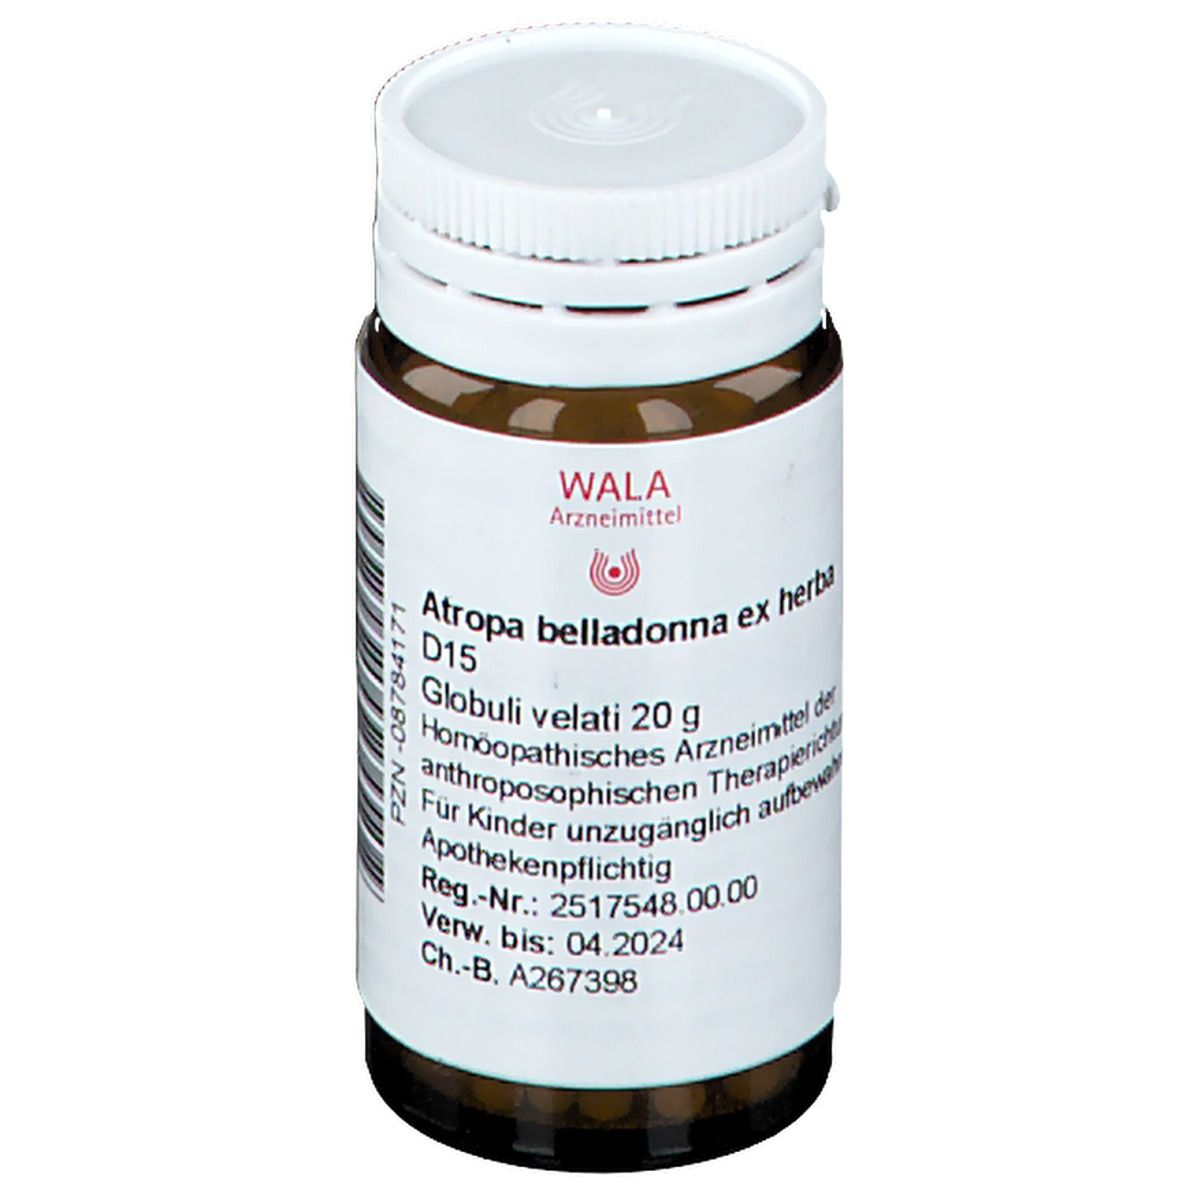 Wala® Atropa belladonna ex herba D 15